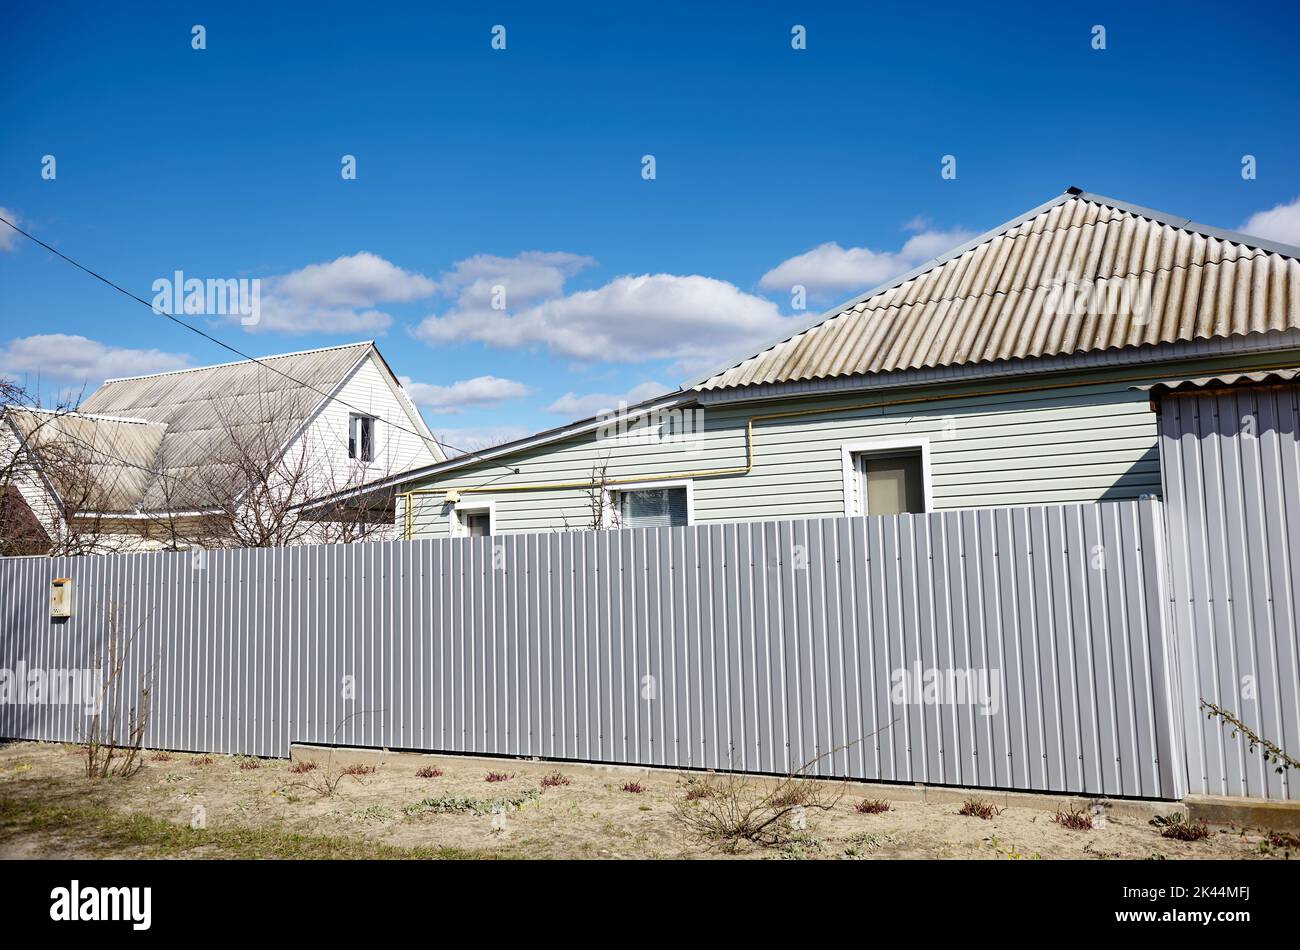 Facade of a European suburban building. Metal fence and house against a blue sky Stock Photo